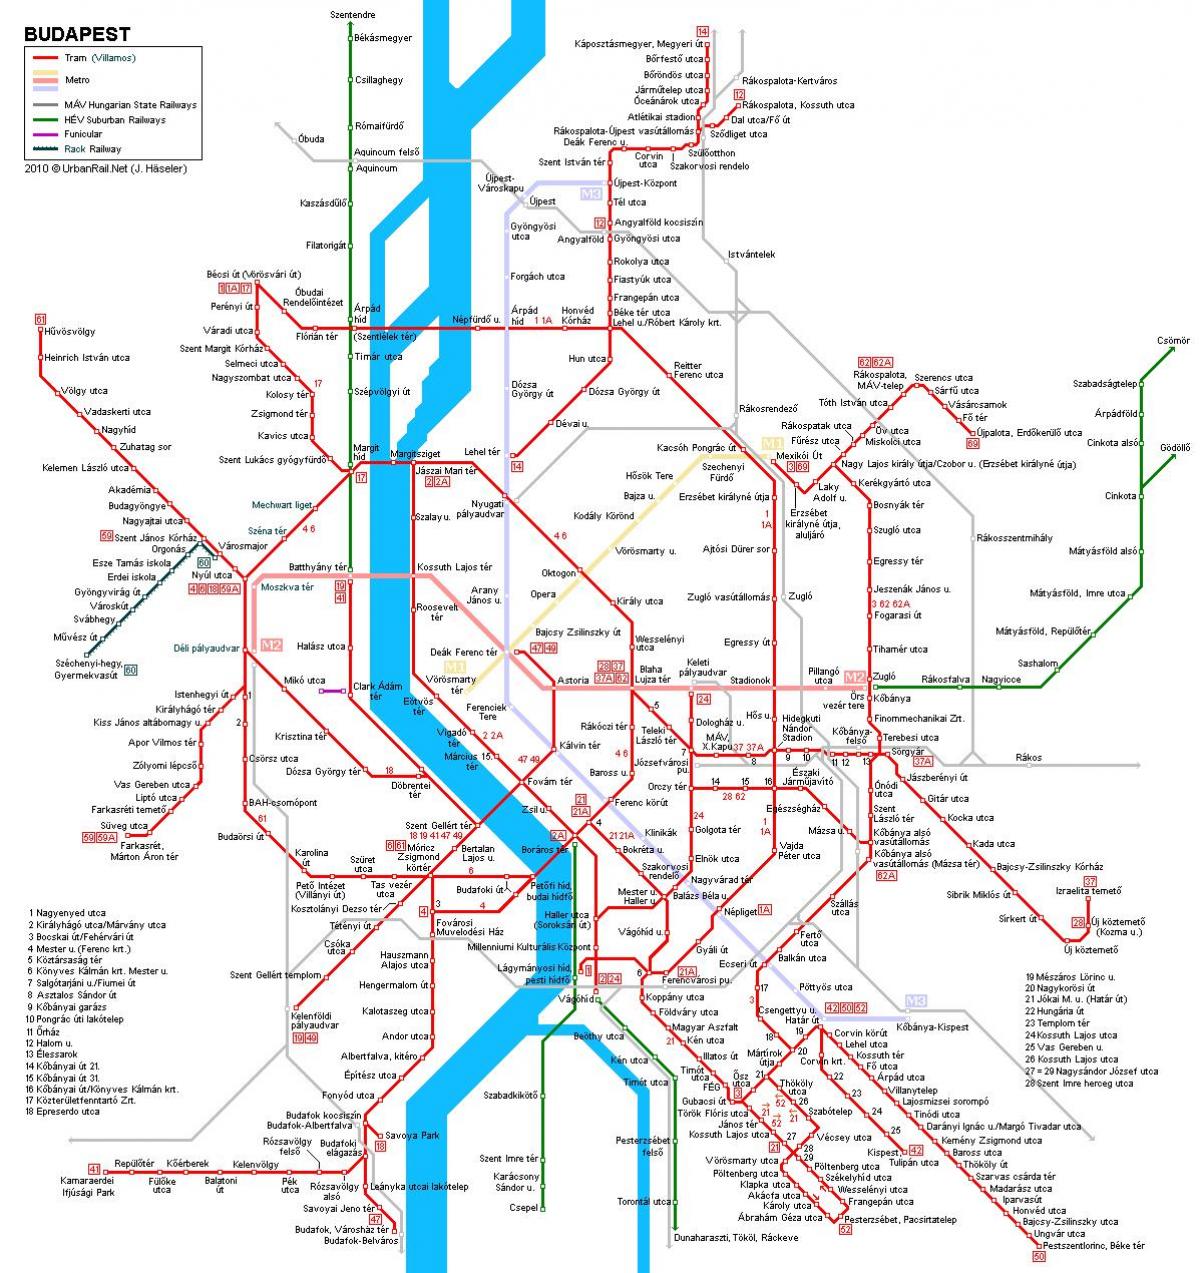 budapest peta kereta api